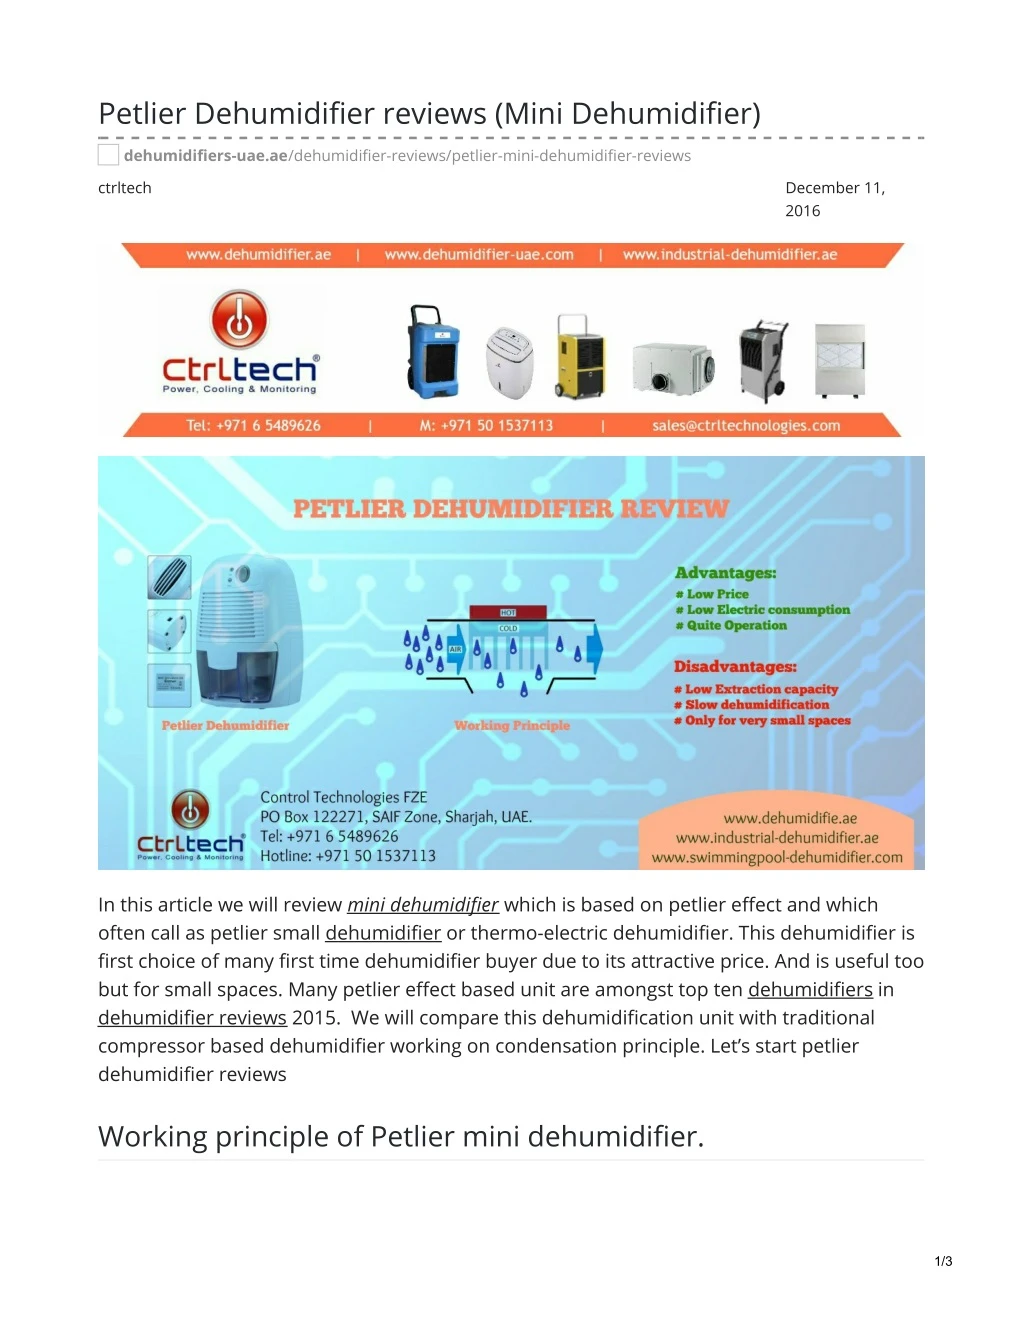 petlier dehumidifier reviews mini dehumidifier